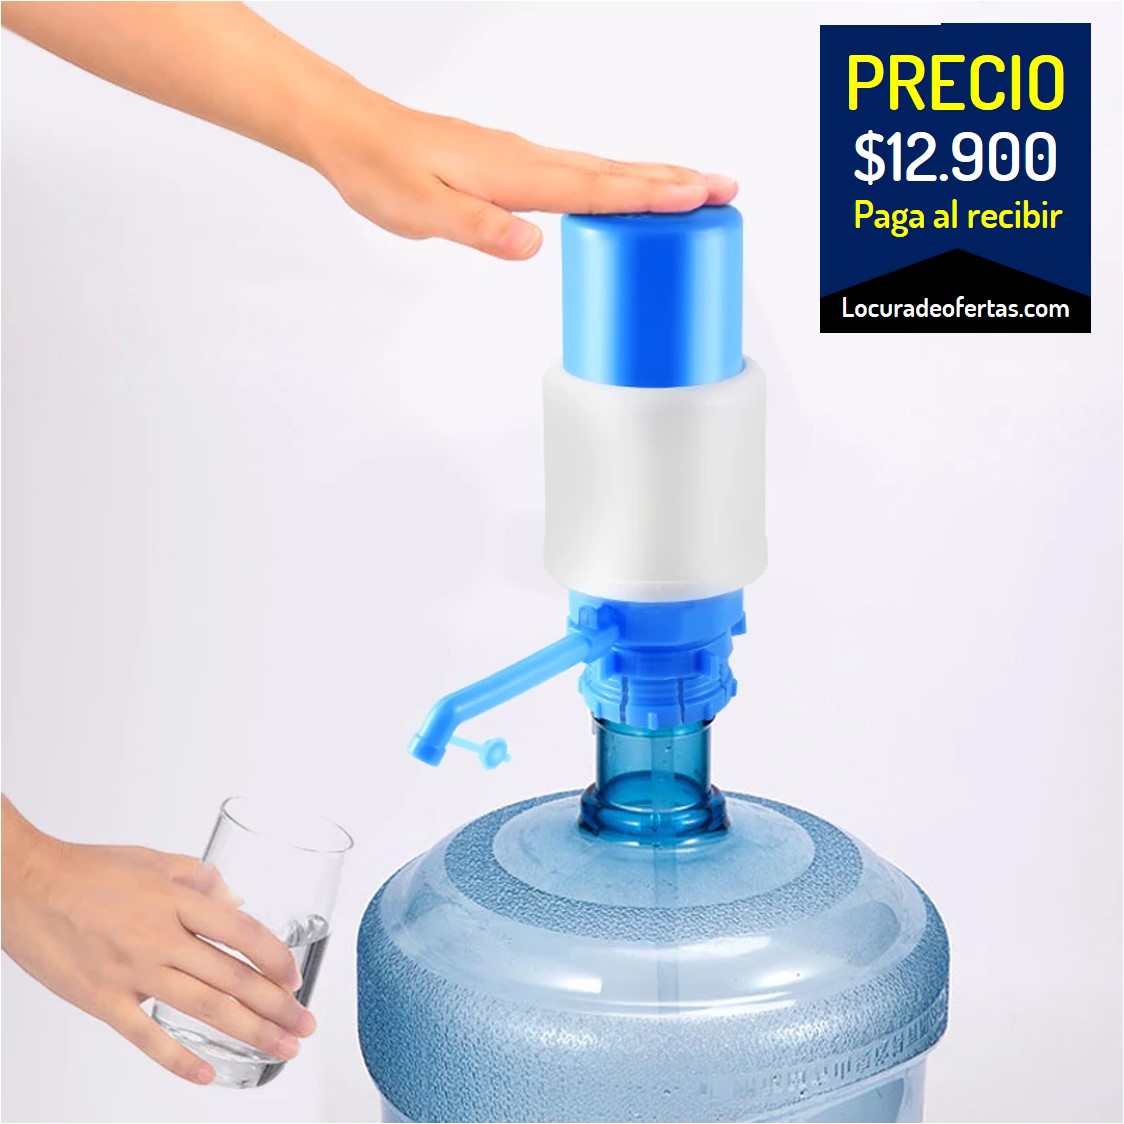 Bomba de agua a presión de la mano, minidispensador de bebidas para el hogar, cubo de agua purificada, bomba de agua potable.